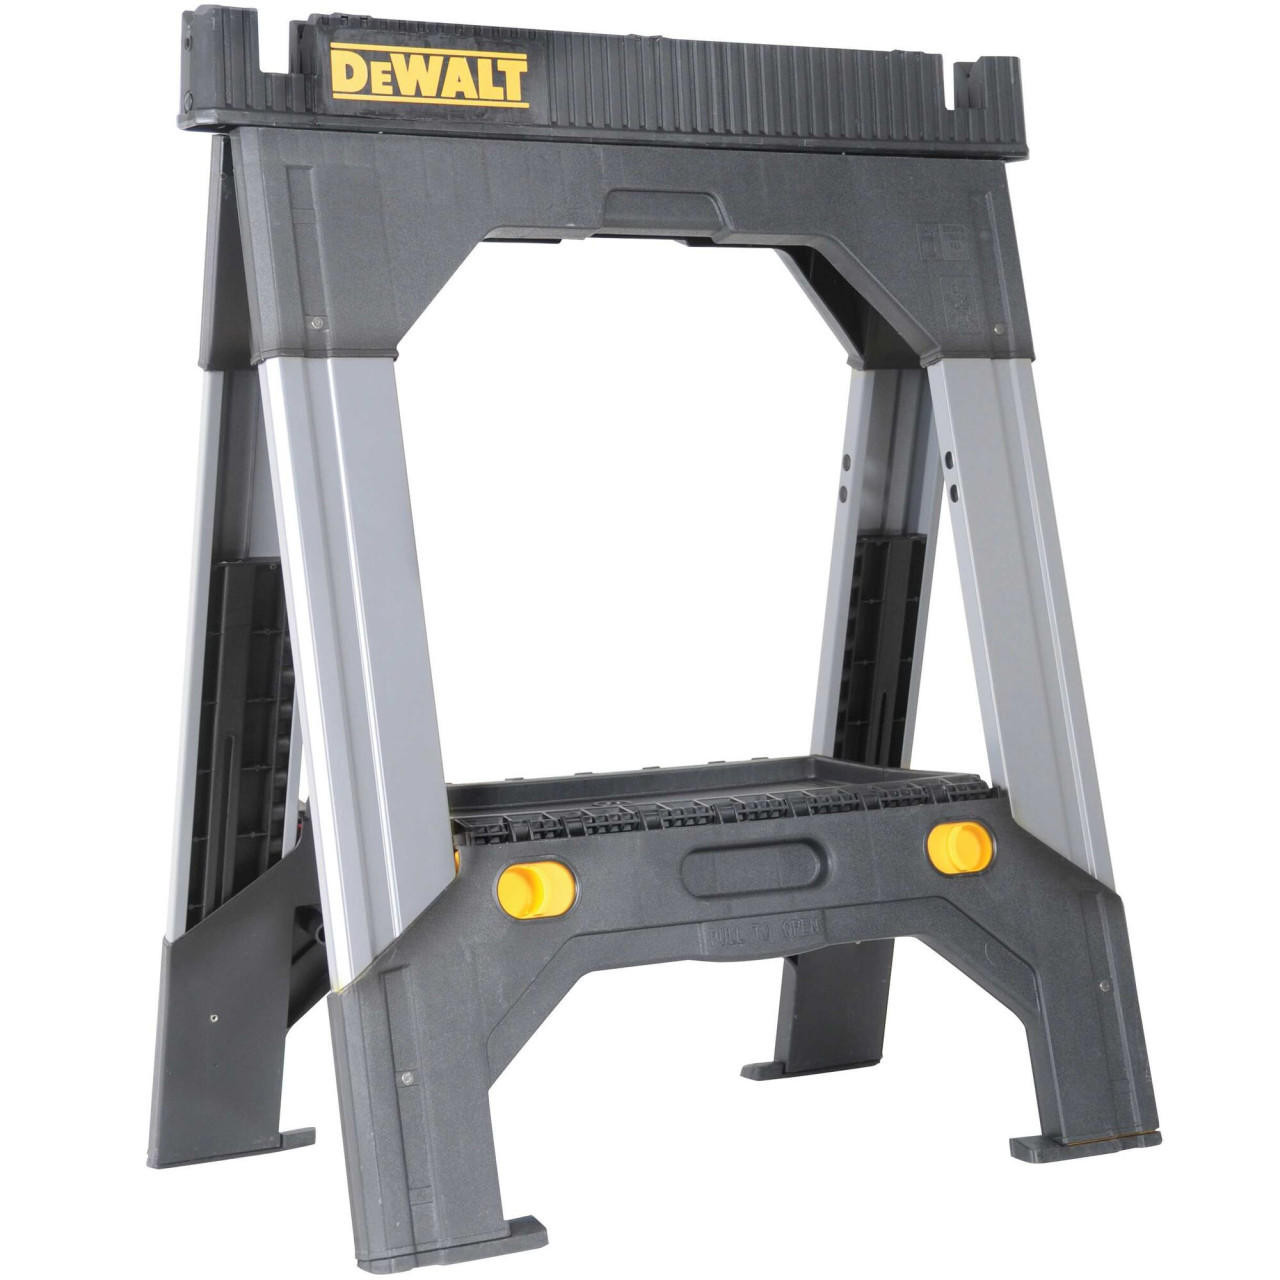 Dewalt DEWALT Adjustable Metal Legs Sawhorse DWST11031 